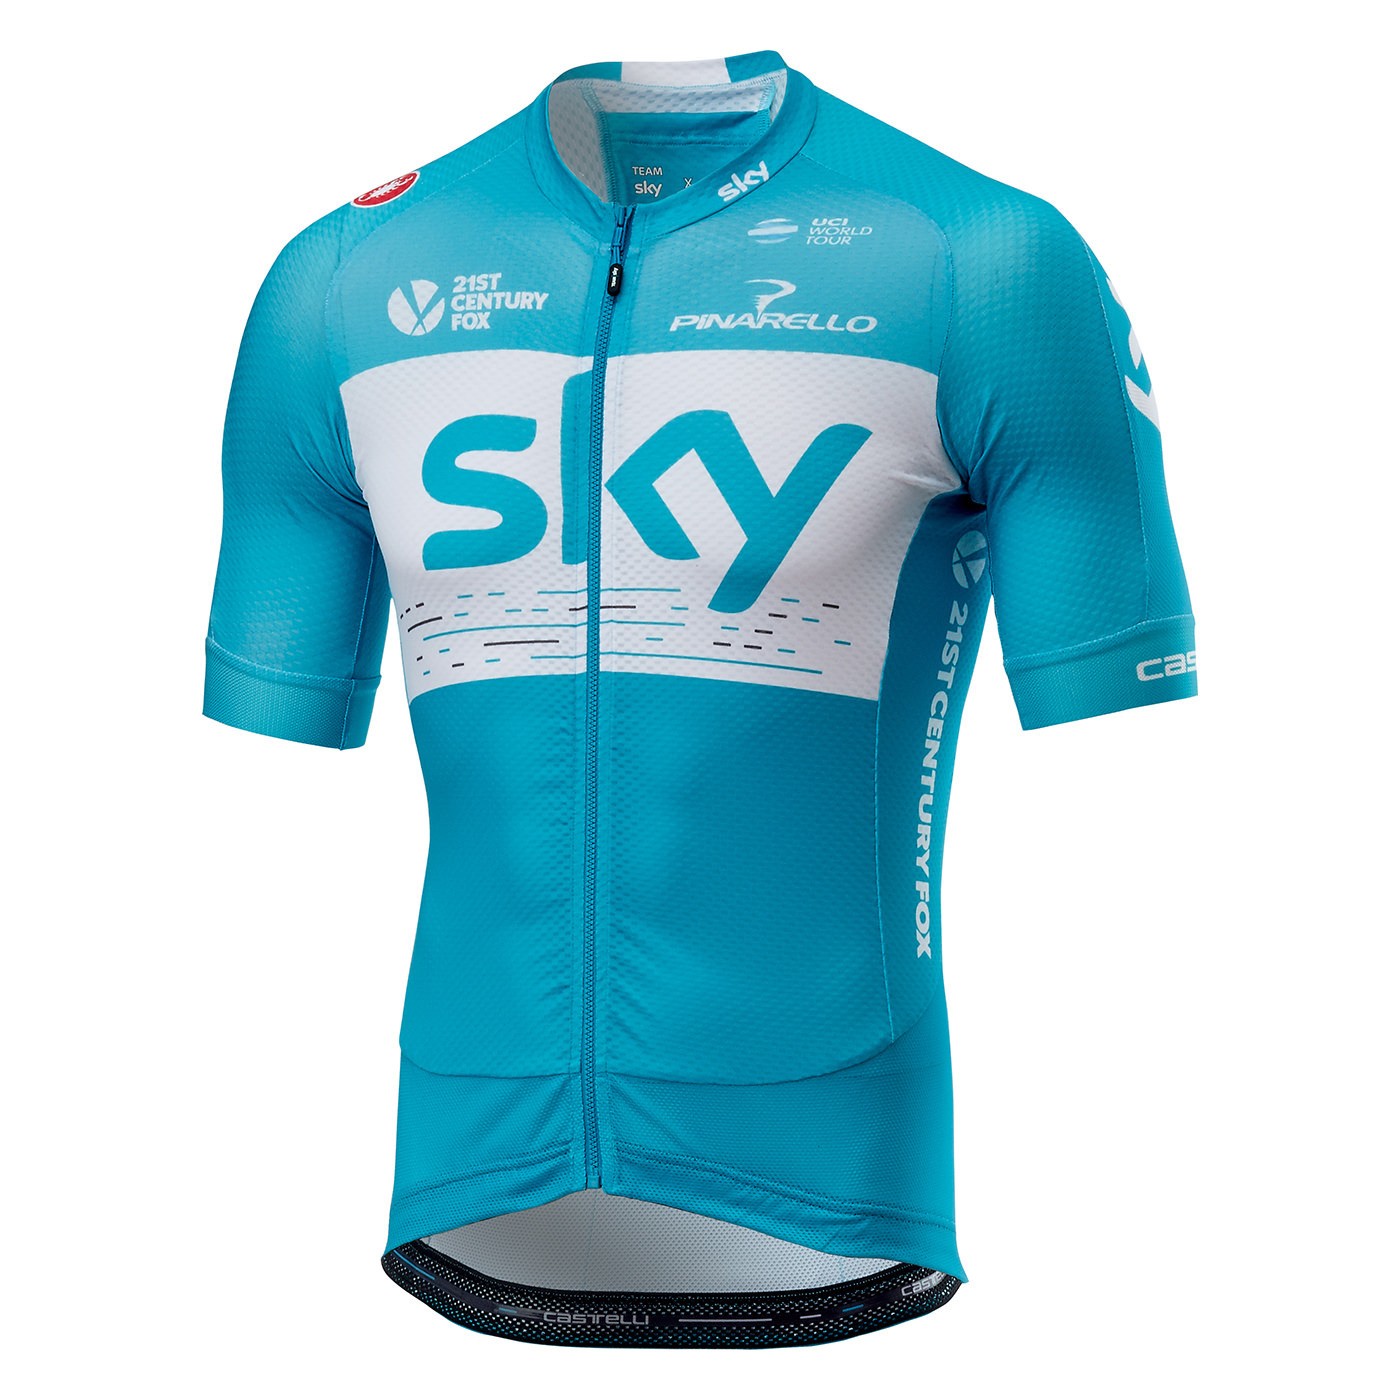 Castelli Sky aero race 5.2 maillot de cyclisme manches courtes sky bleu